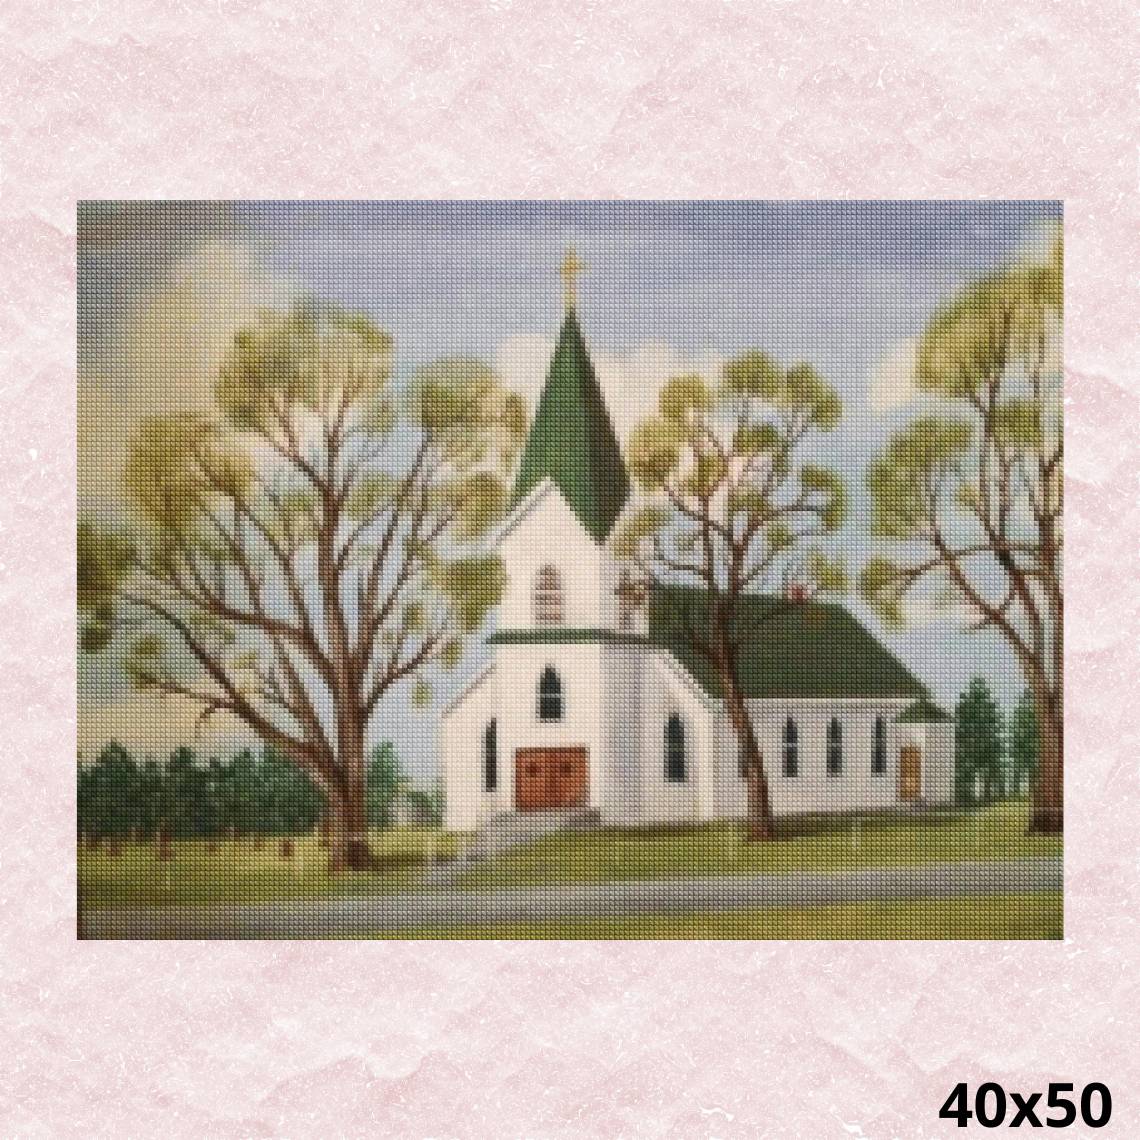 Holy Trinity Church 40x50 - Diamond Painting